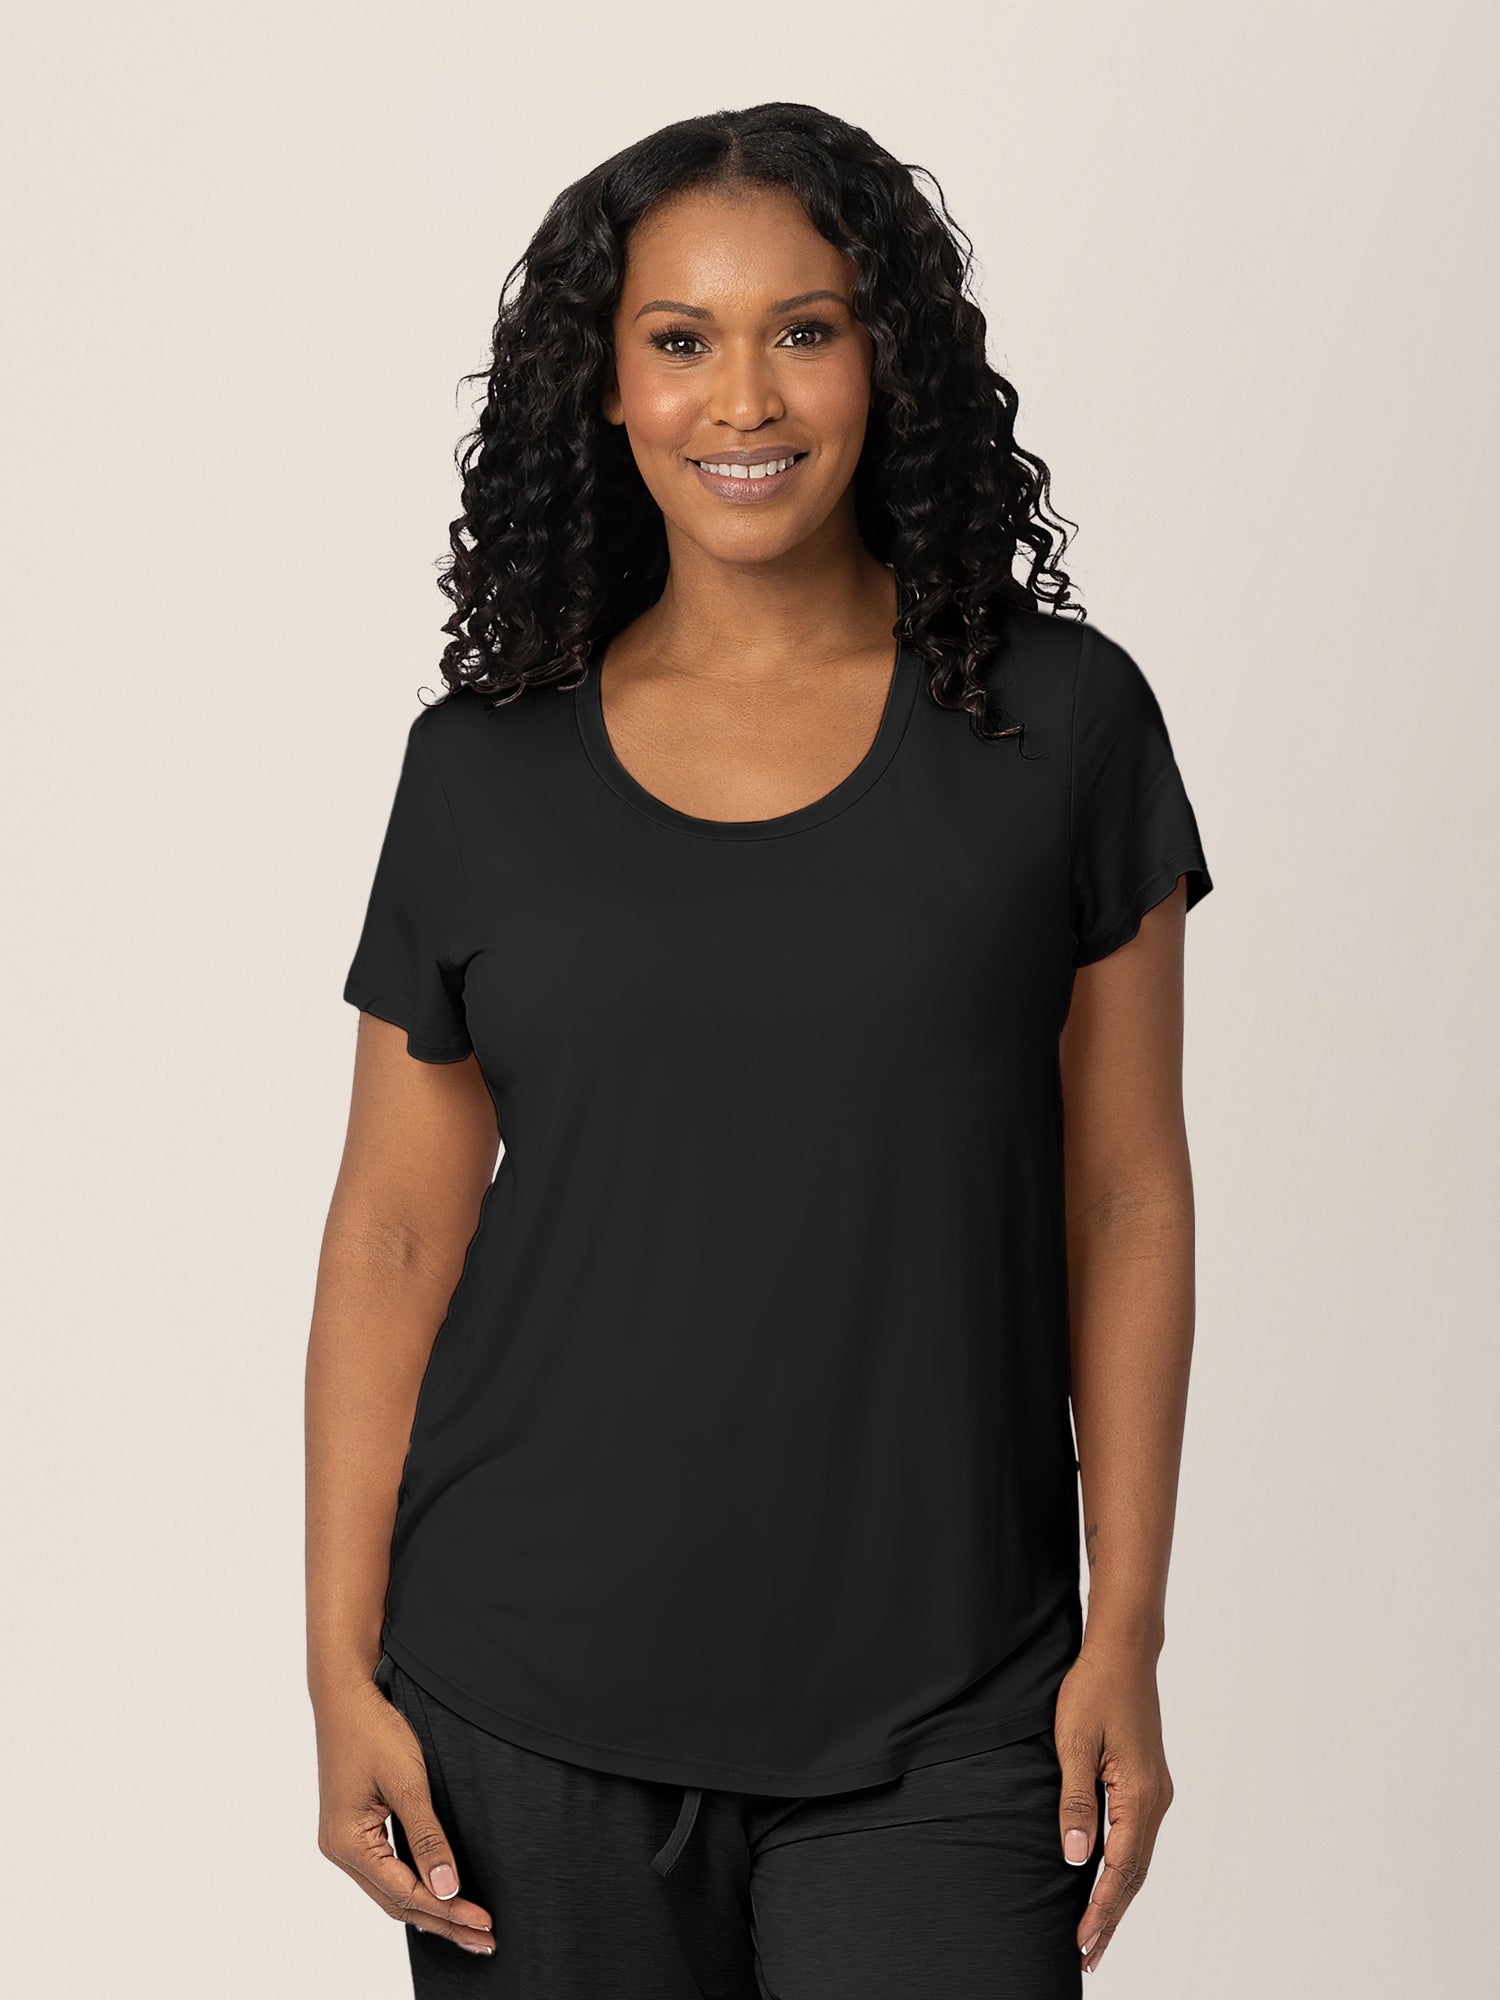 Maternity Nursing T-Shirt Bra - Black (36B)